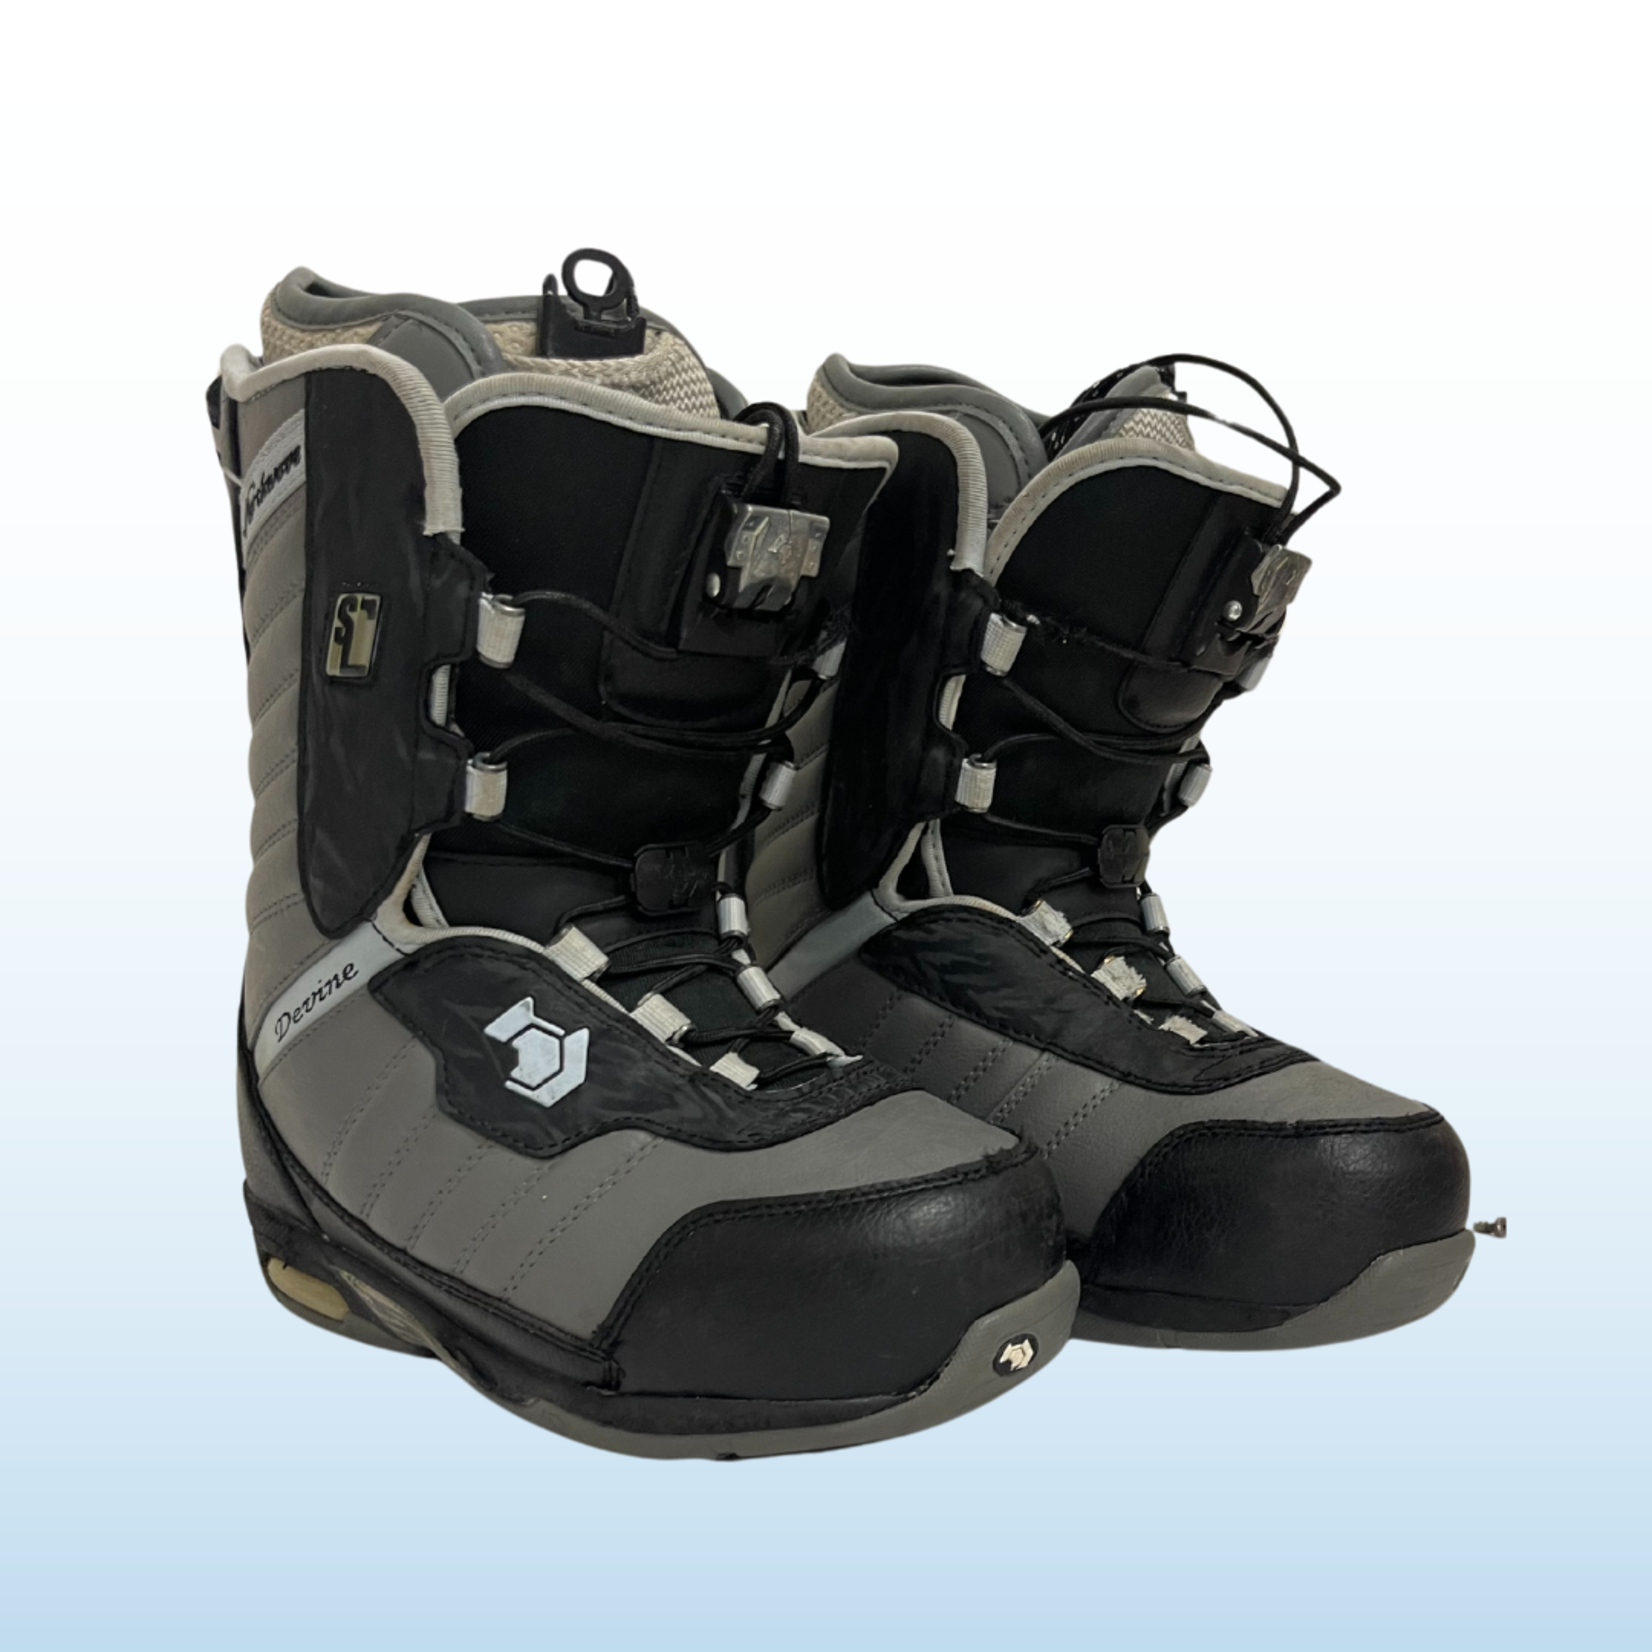 Northwave Northwave Snowboard Boots, Size 7 Men's/8 Women's